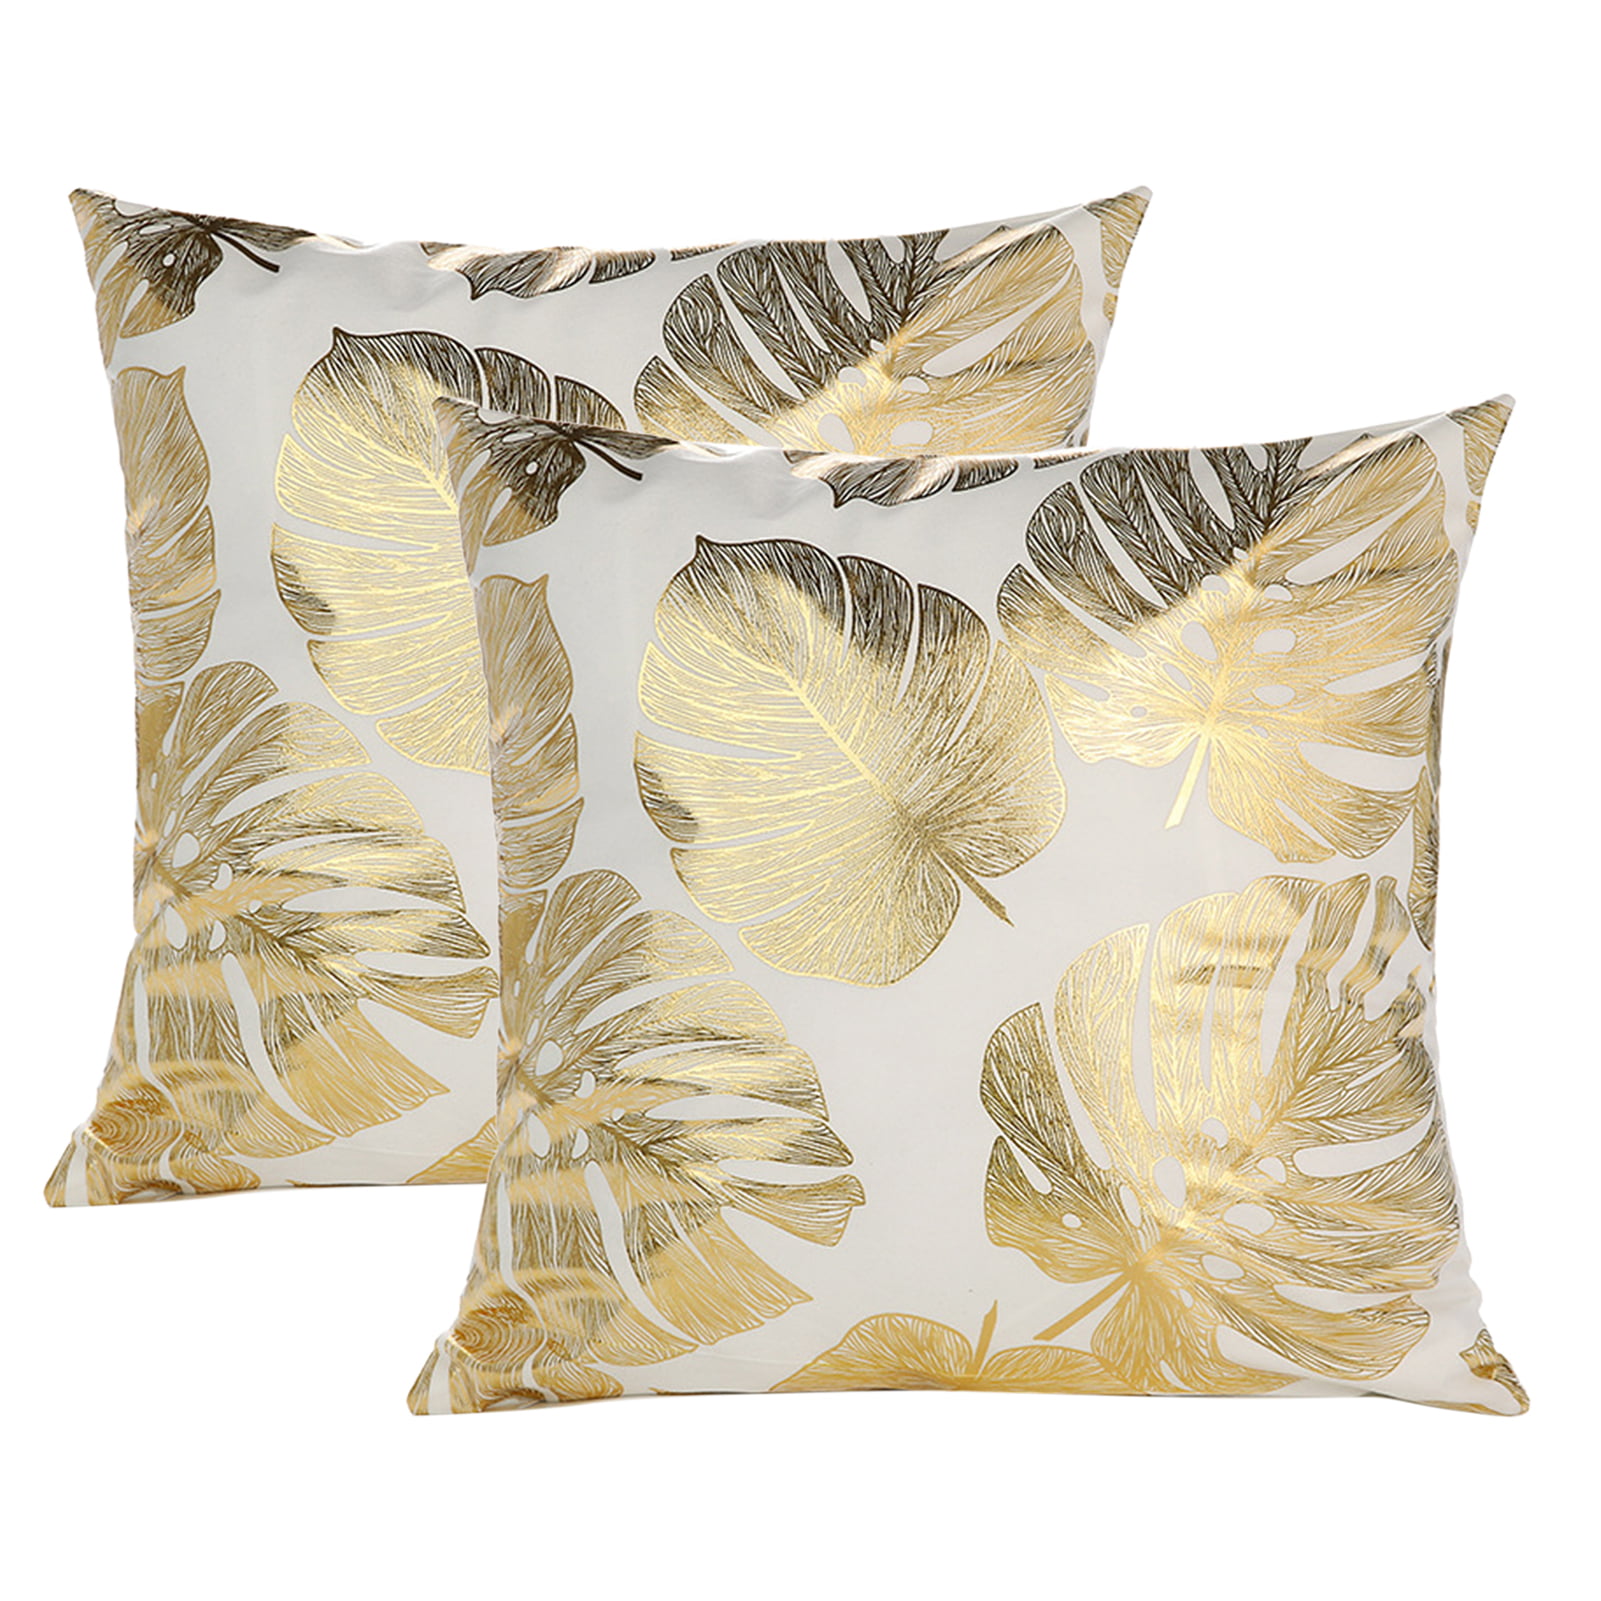 Gold Foil Pillow Cover 20x20 Decorative Pillow Glam Pillow Pillows Decor Metallic Pillow